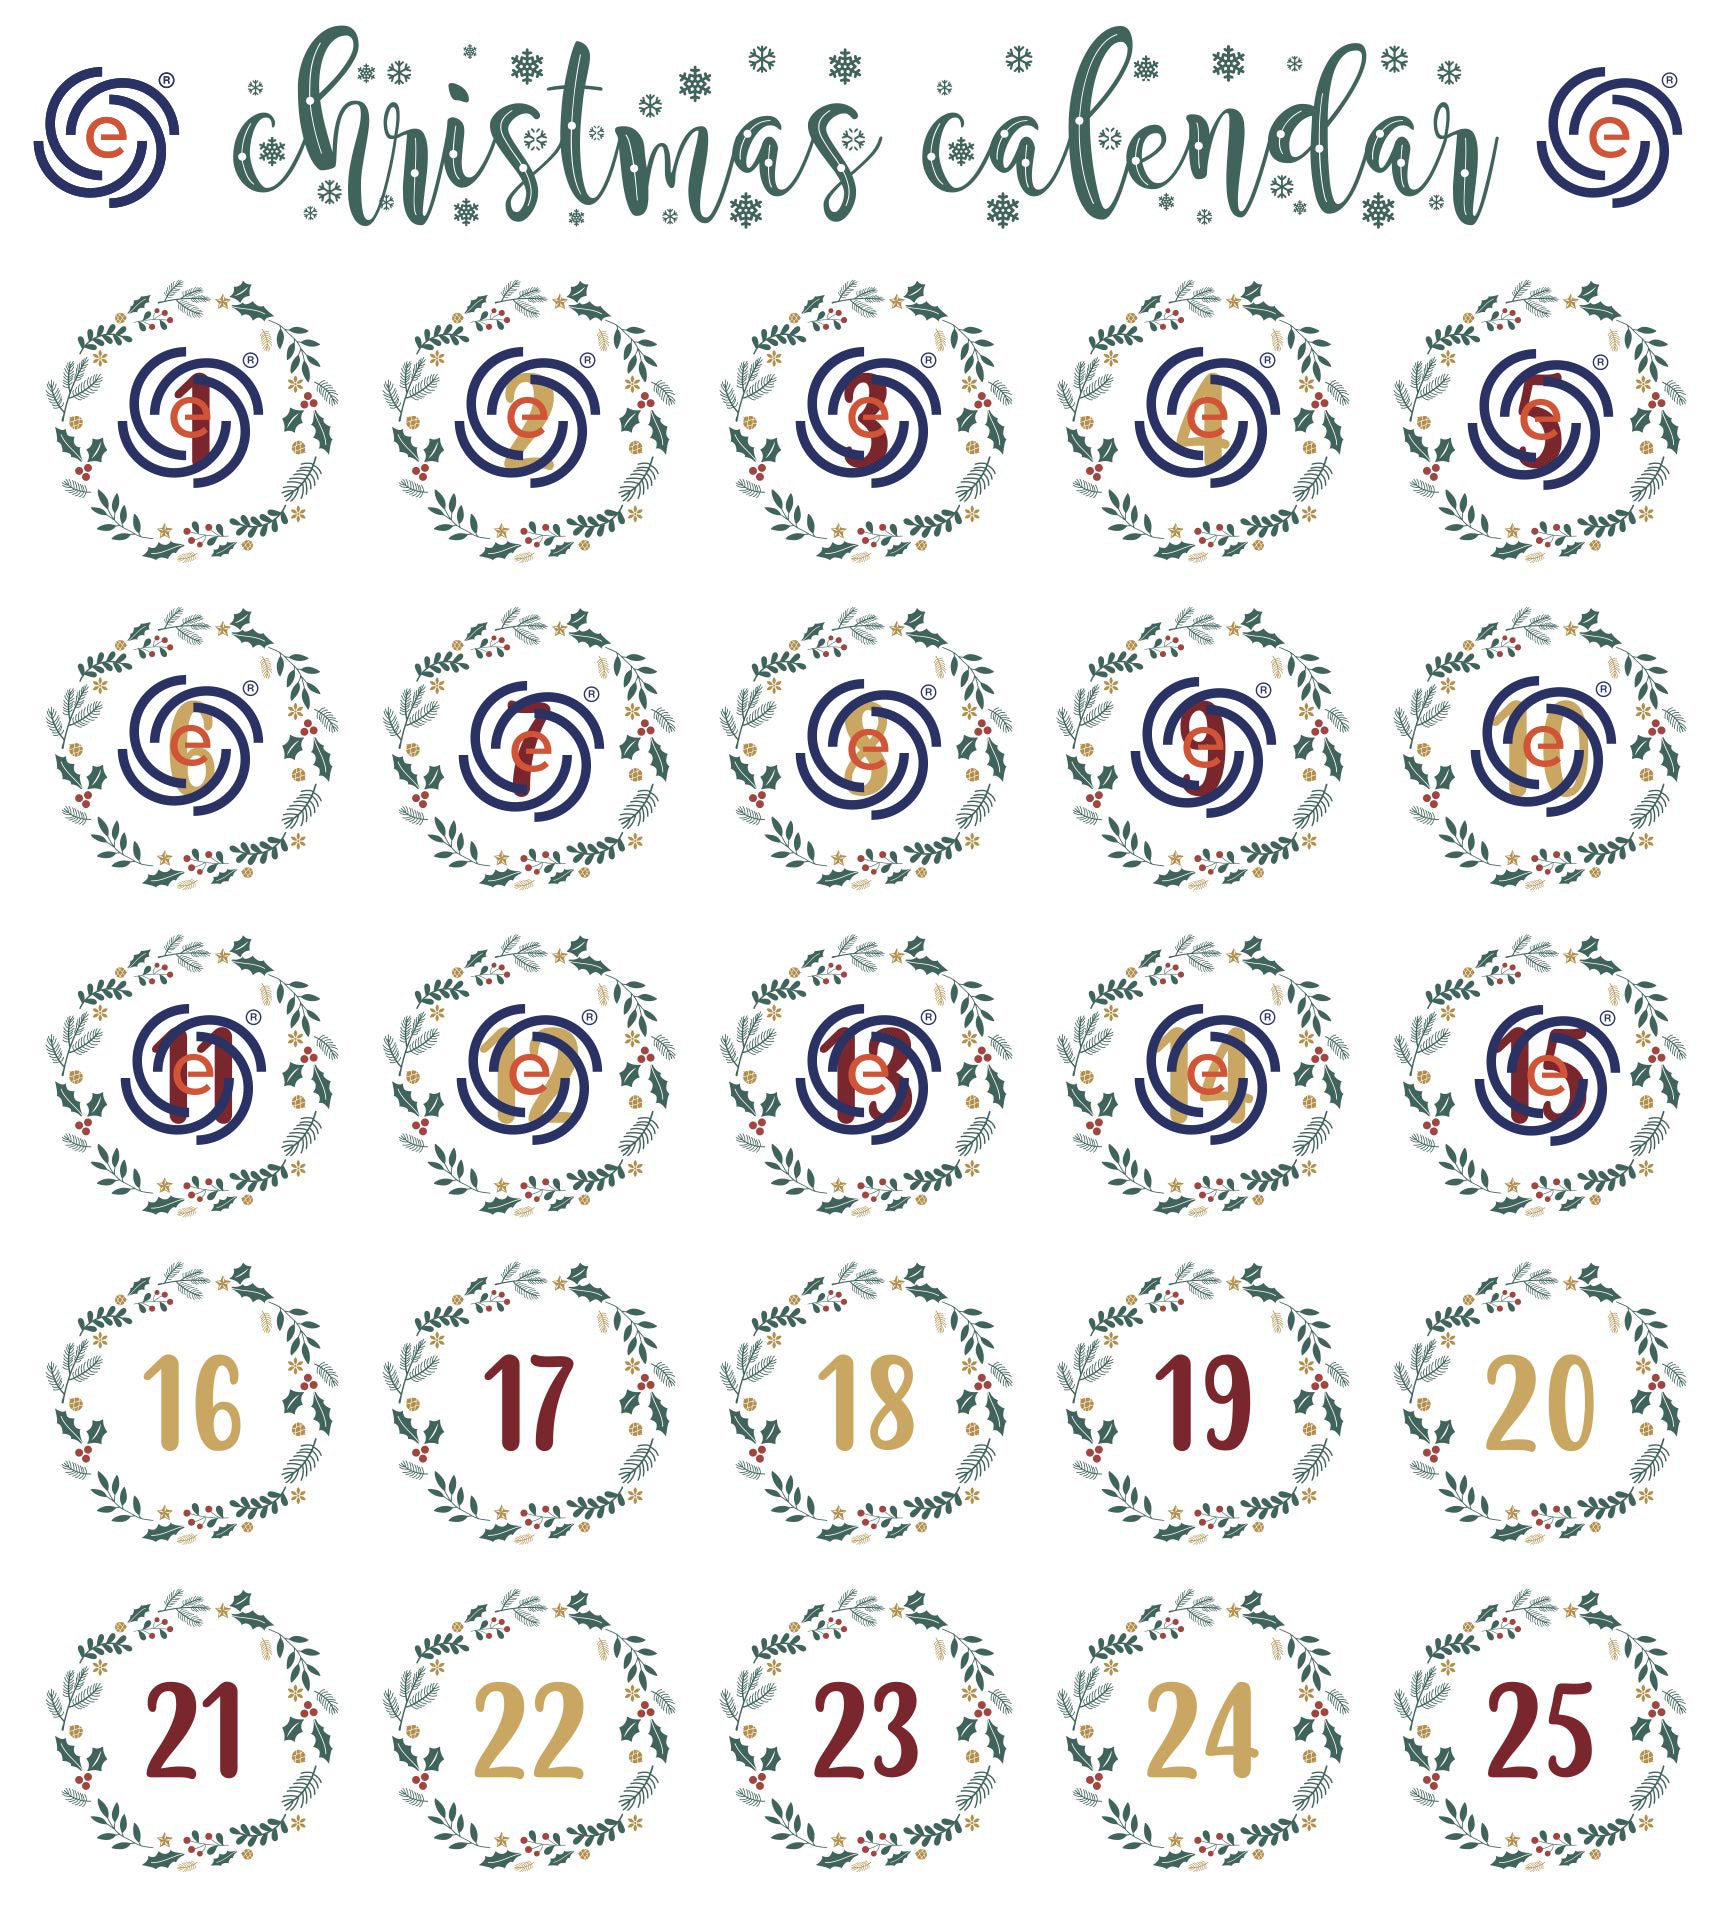 December 16th Christmas Discount Calendar - 25% off Koi SOS Start up